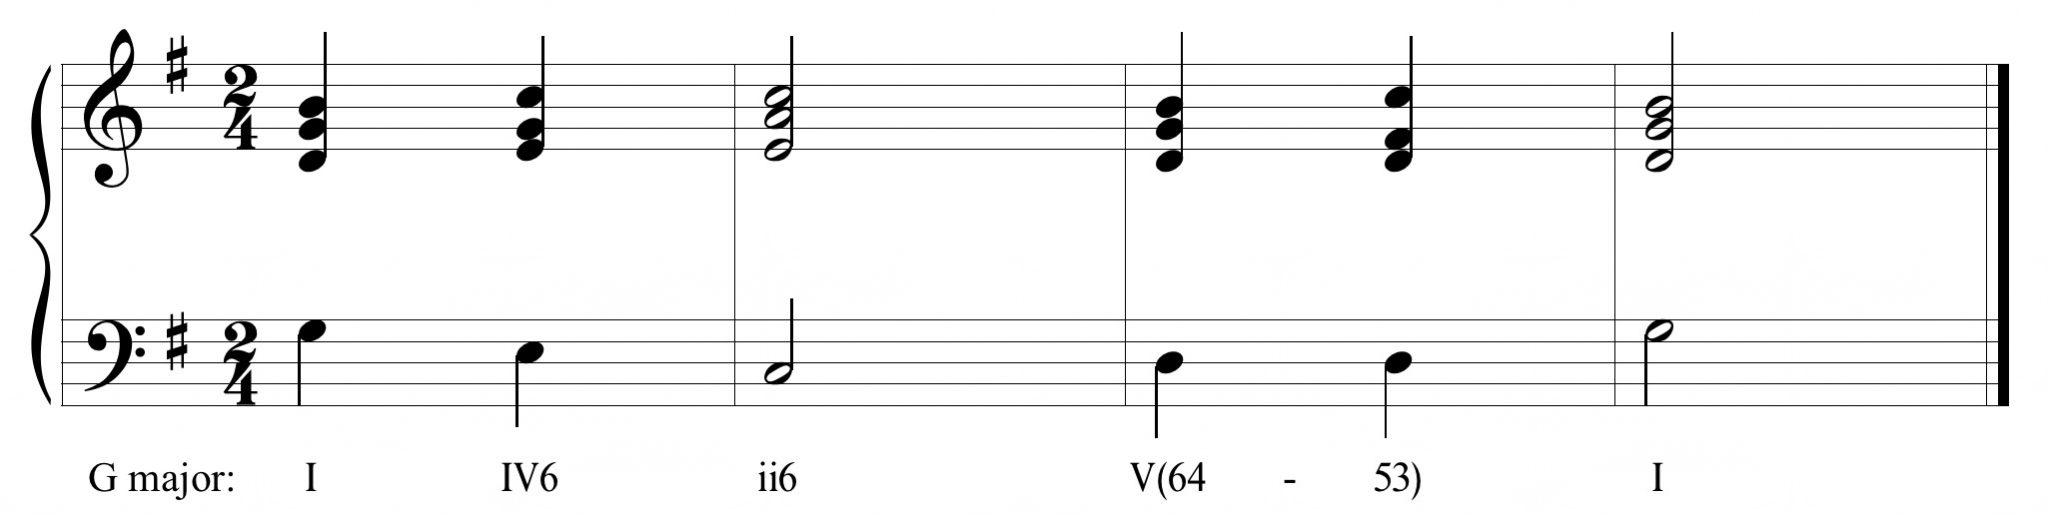 jazz chord aural training